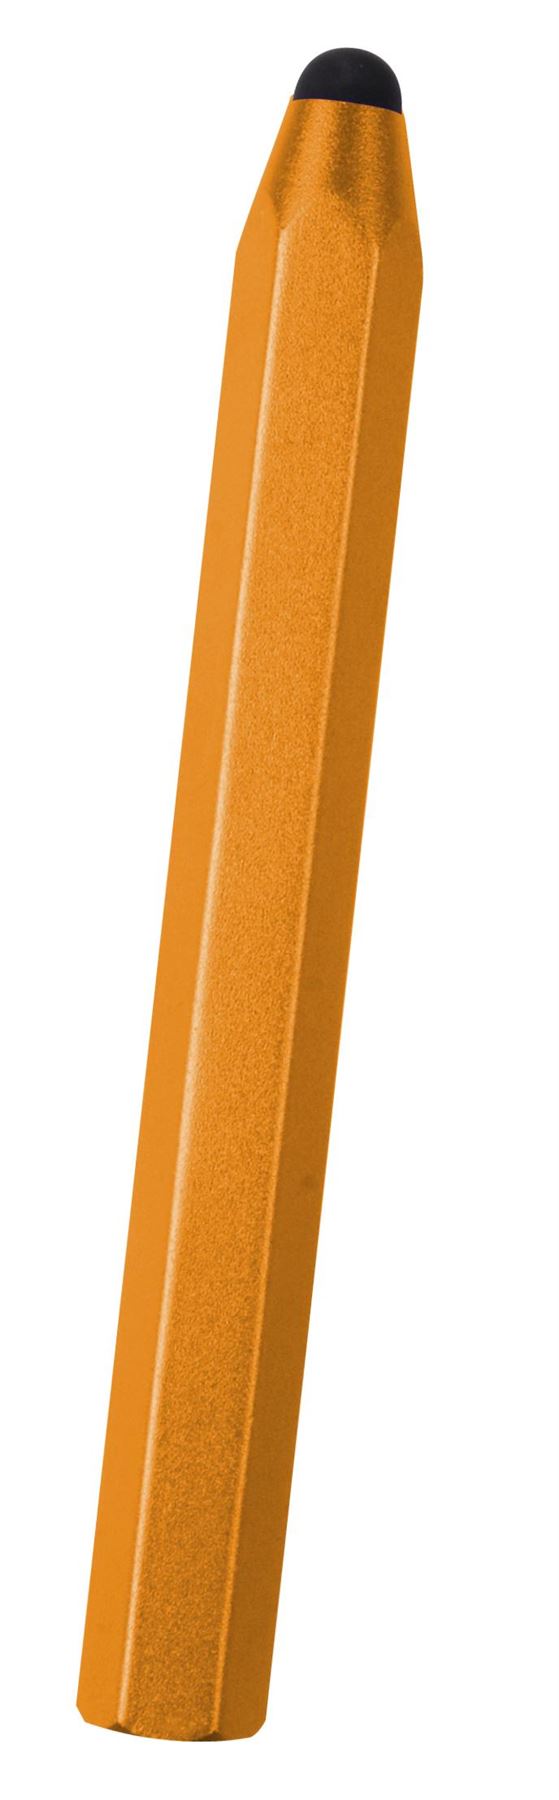 Gold Aluminium Crayon Shaped Stylus for iPad iPhone Tablet Smartphone